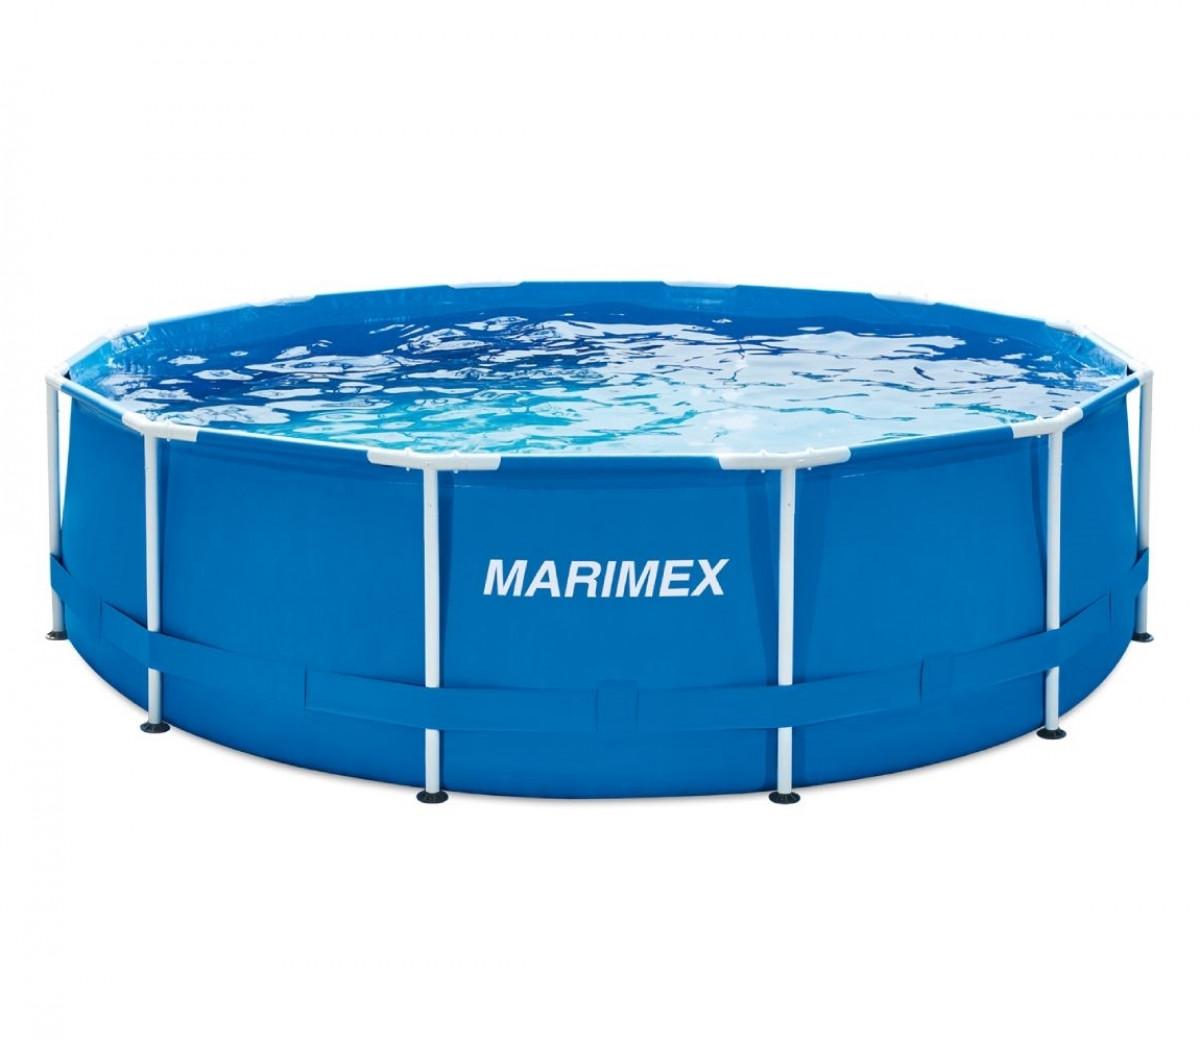 Marimex | Bazén Florida 3,66x0,99 m bez příslušenství | 10340246